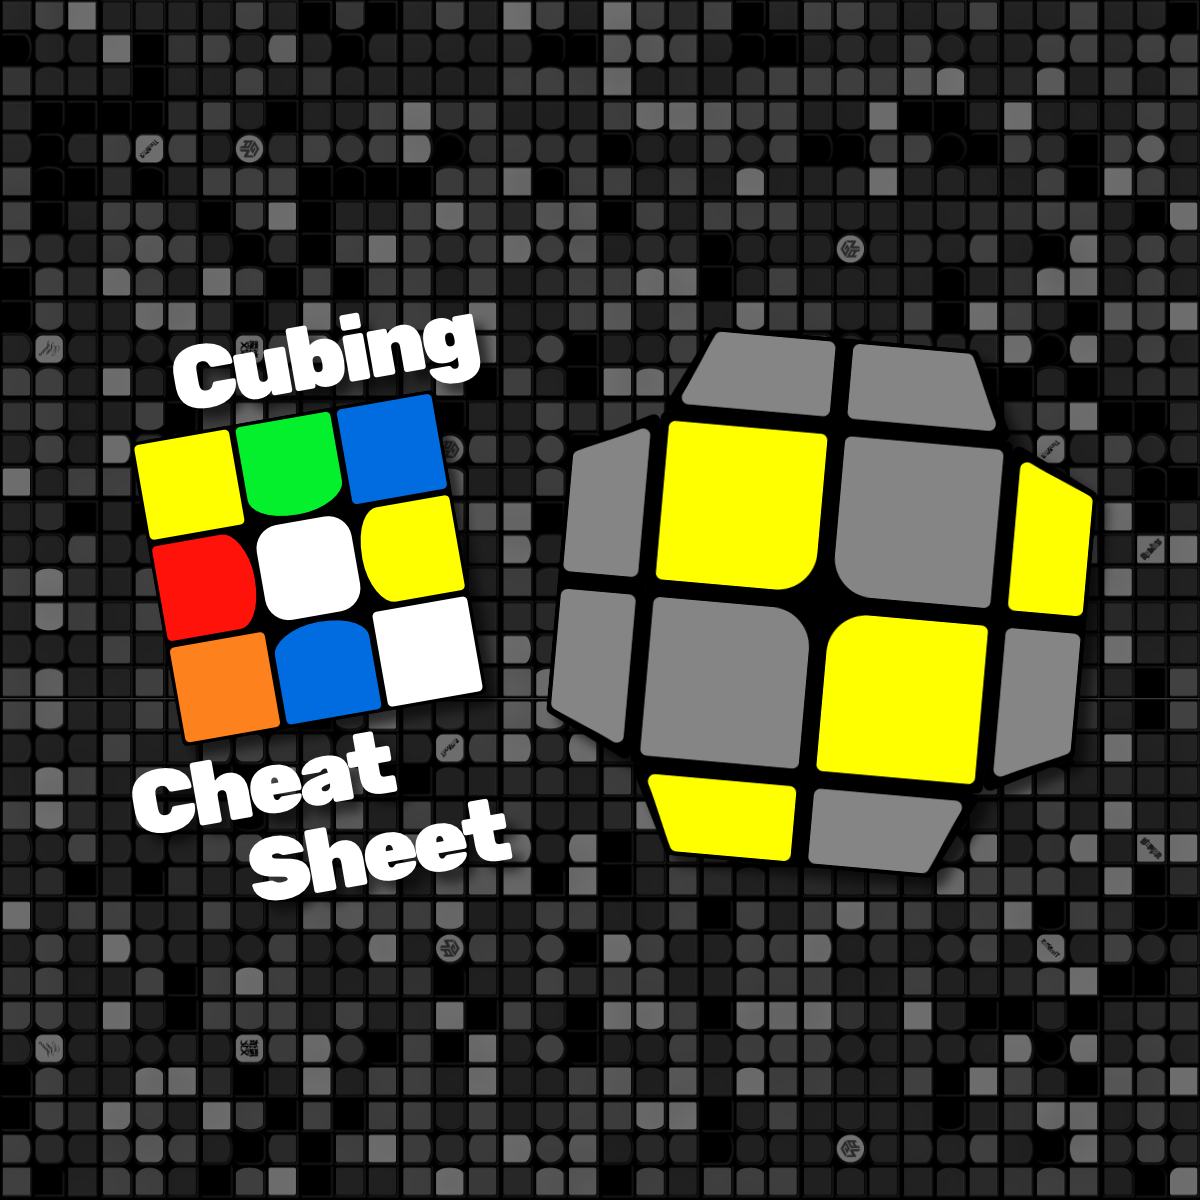 2x2 rubik's cube algorithms pdf